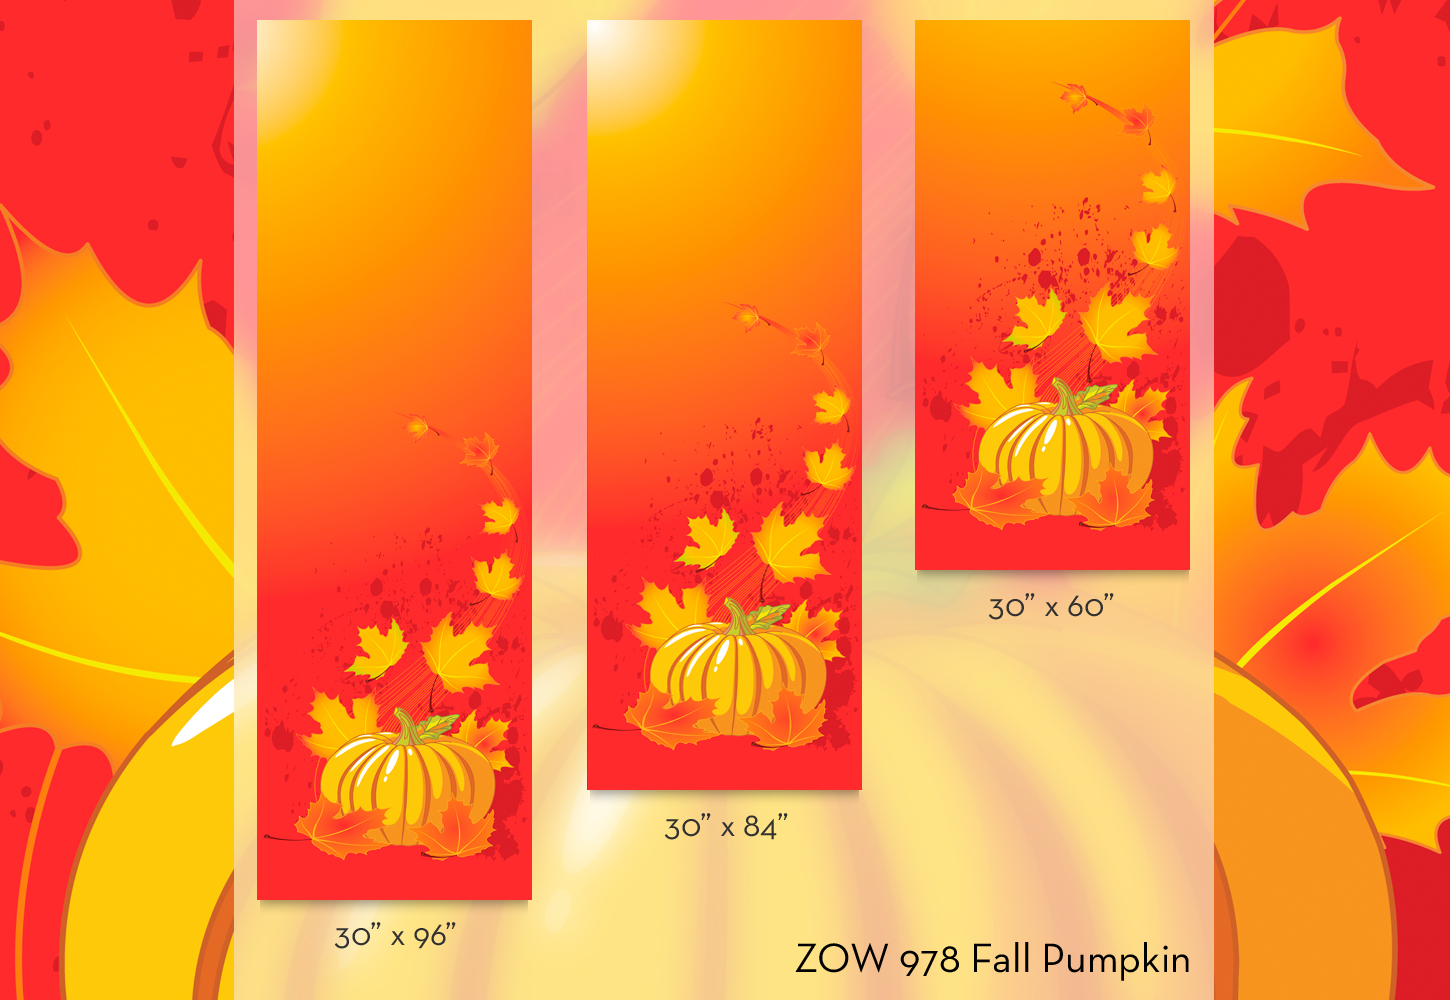 ZOW 978 Fall Pumpkin